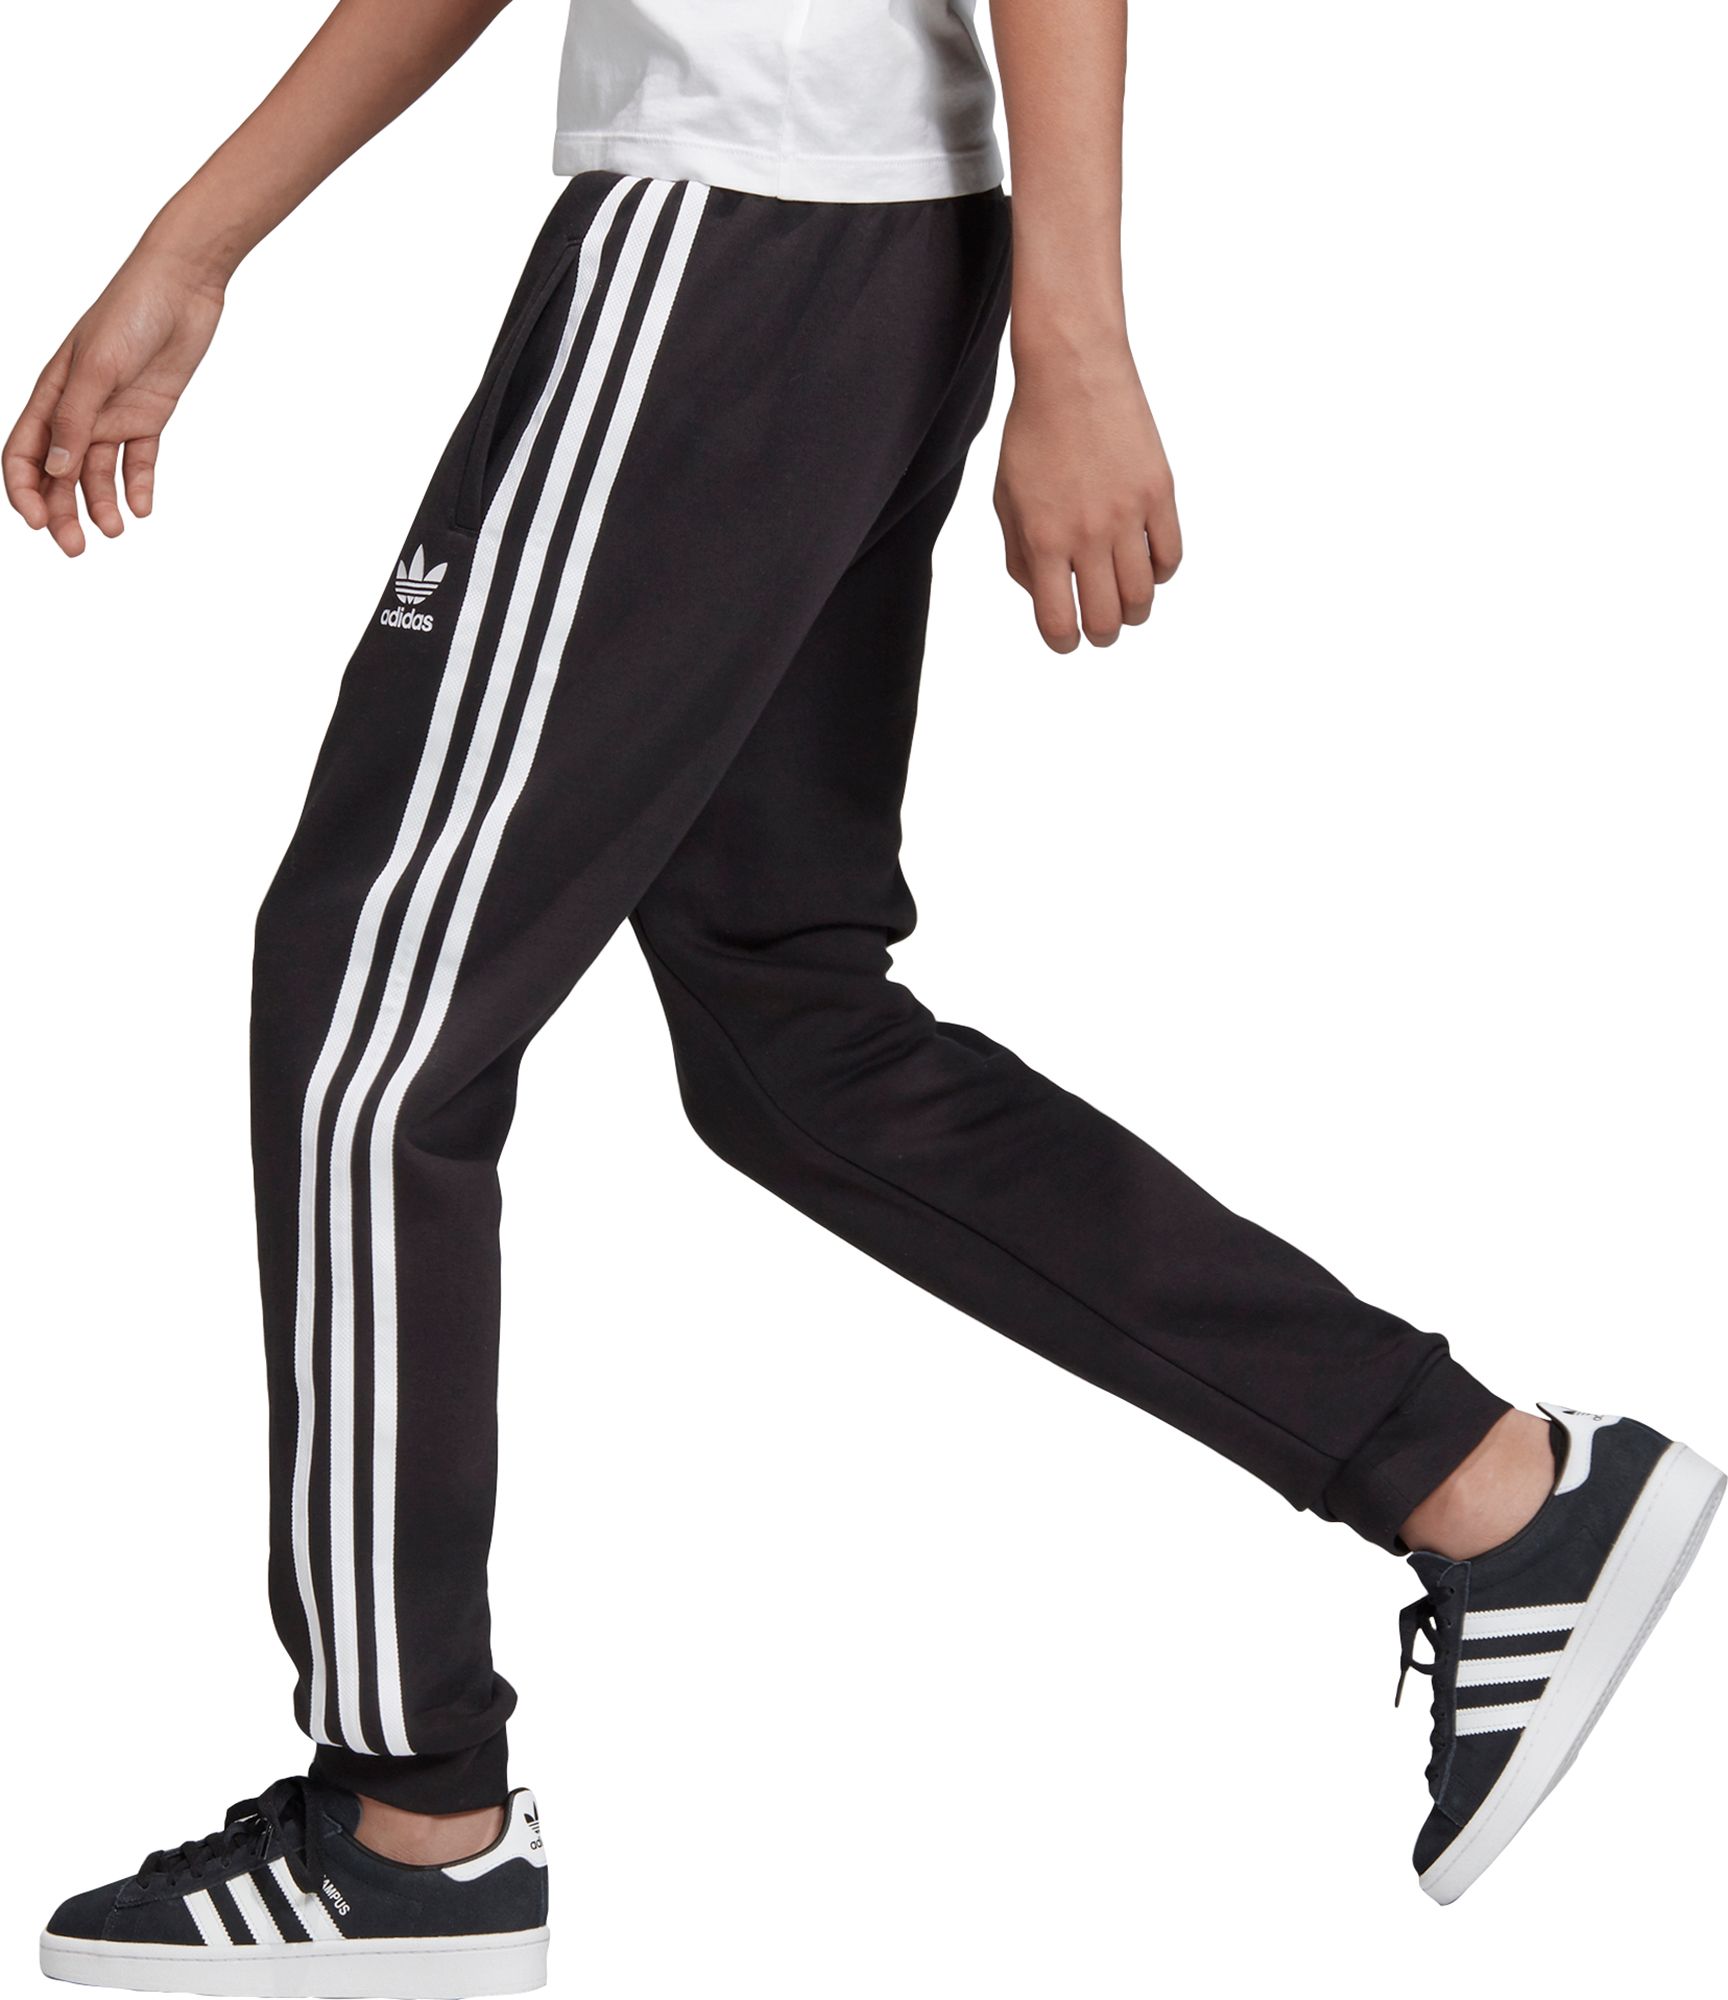 adidas 3 stripe track pants